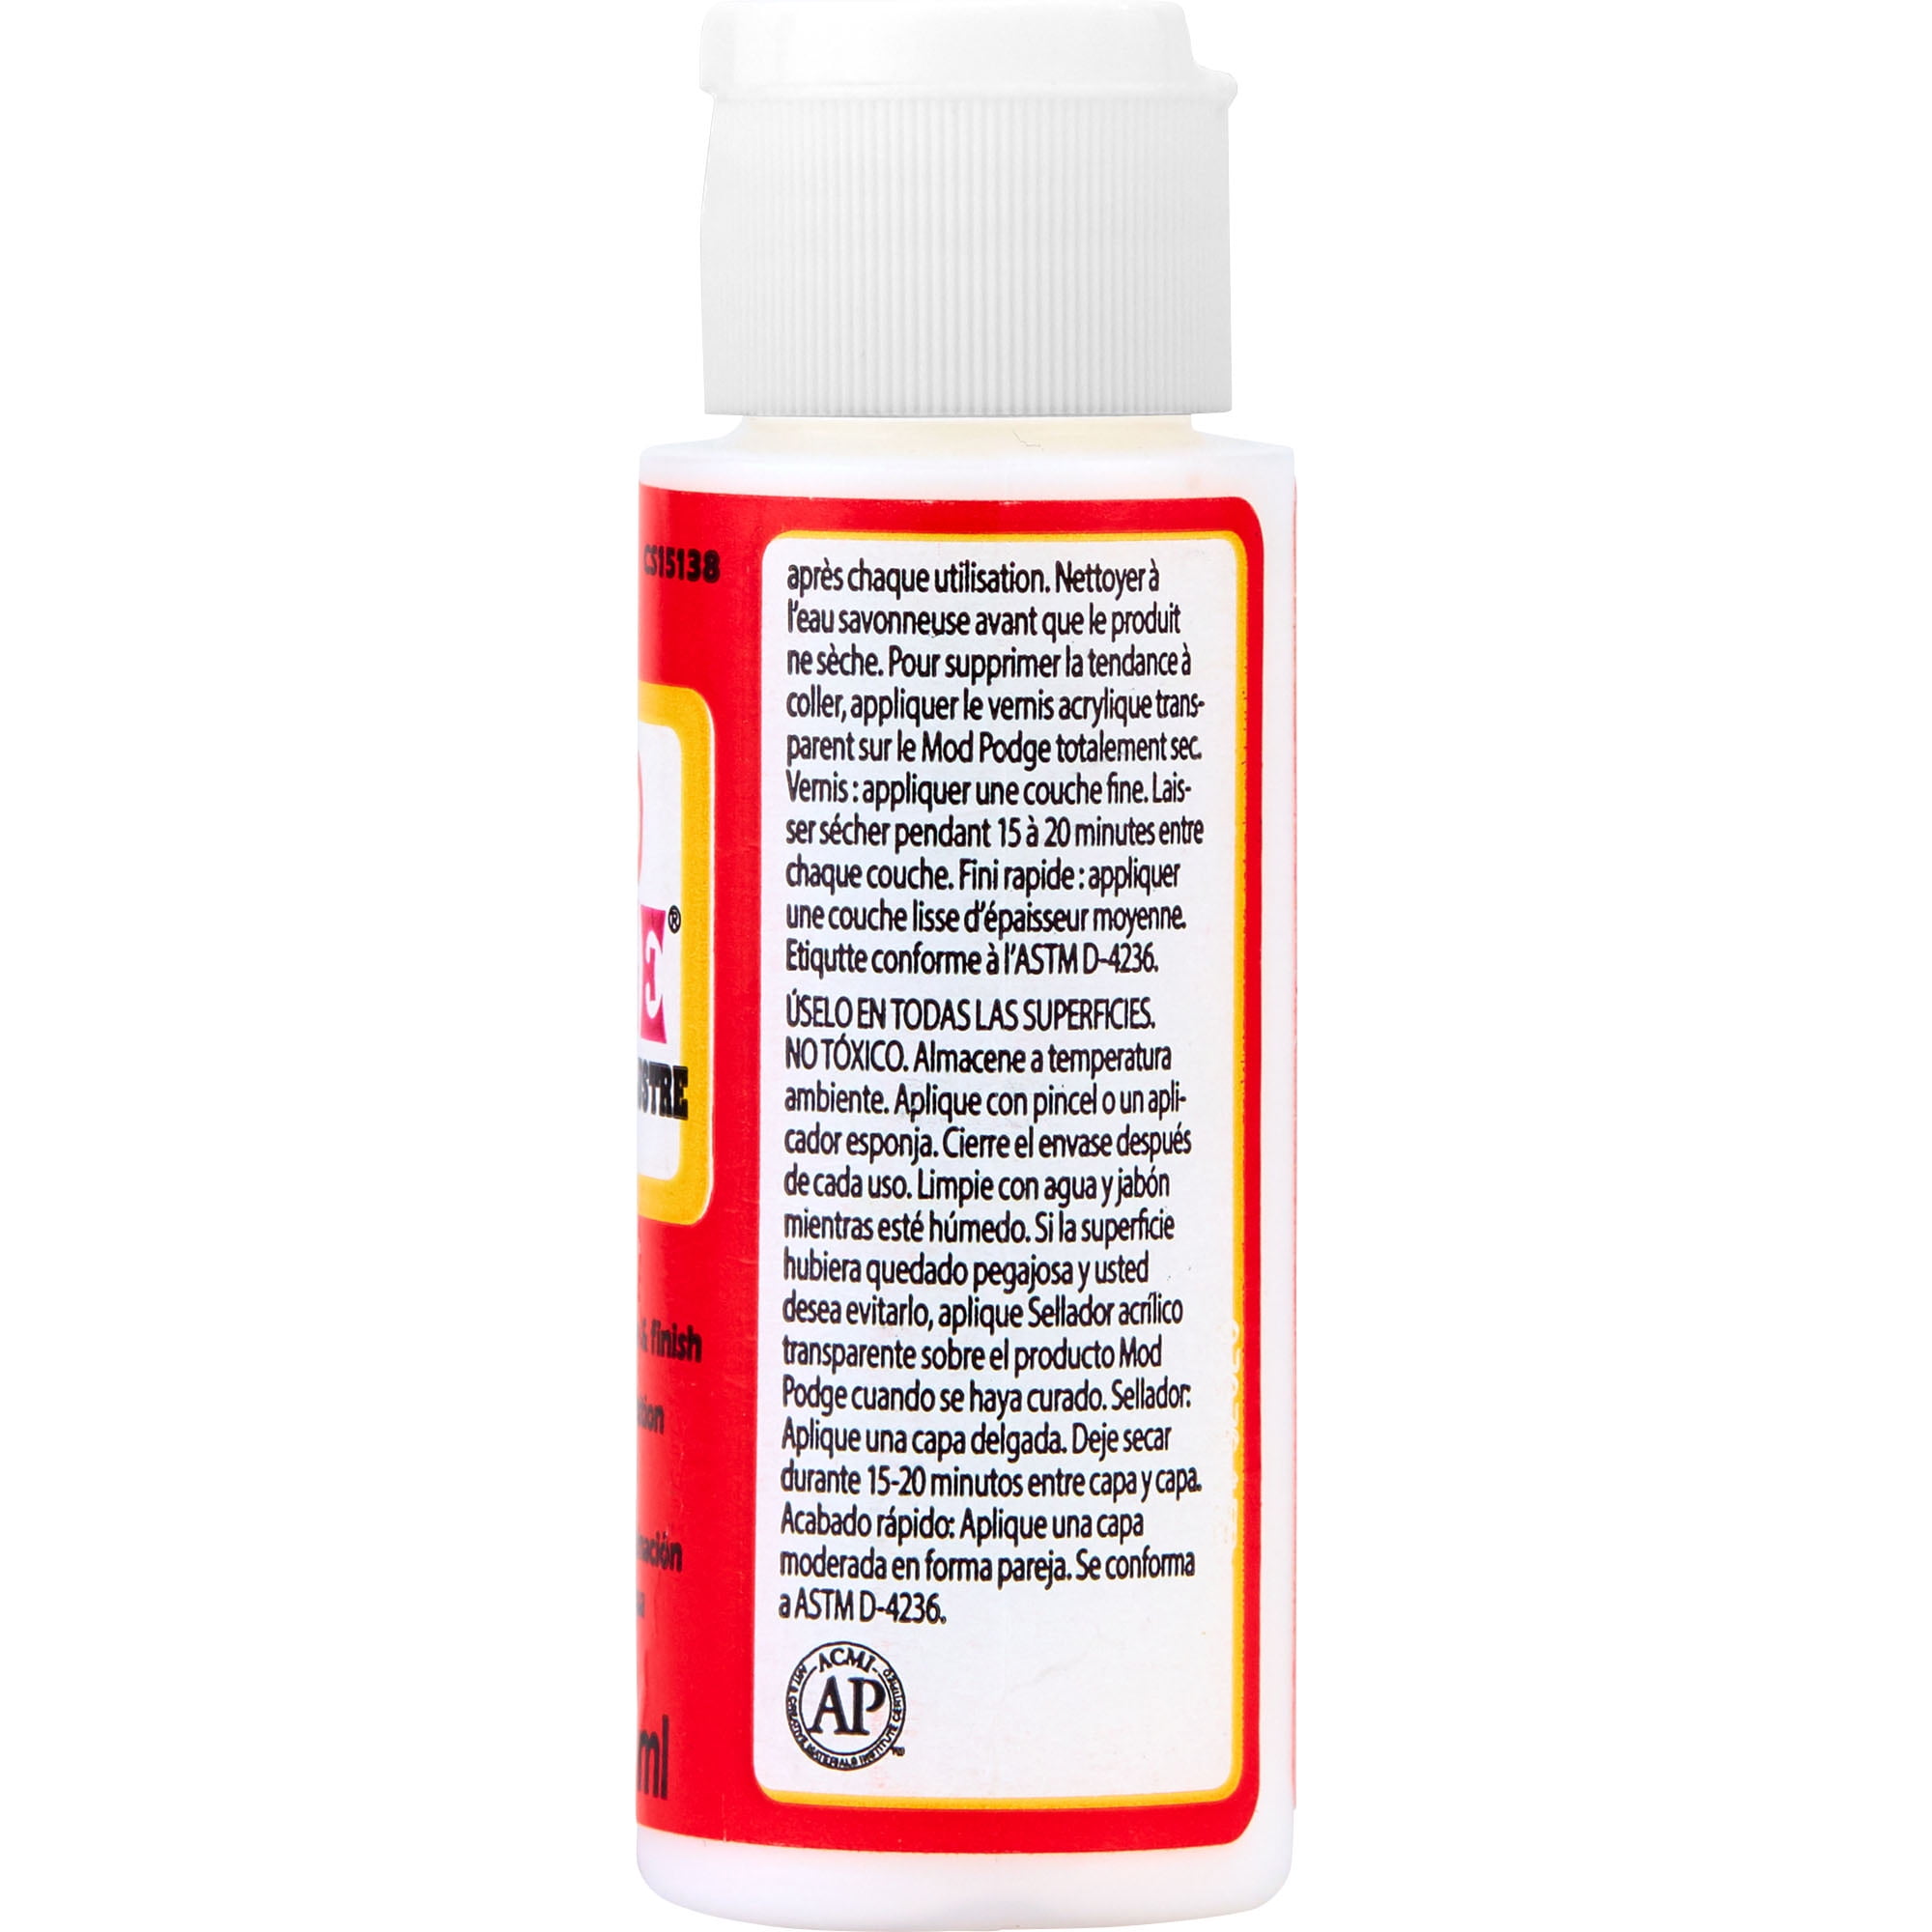 Plaid Mod Podge Spray Clear Gloss Shine Craft Coat Acrylic Sealer  12oz/340g, 2PK